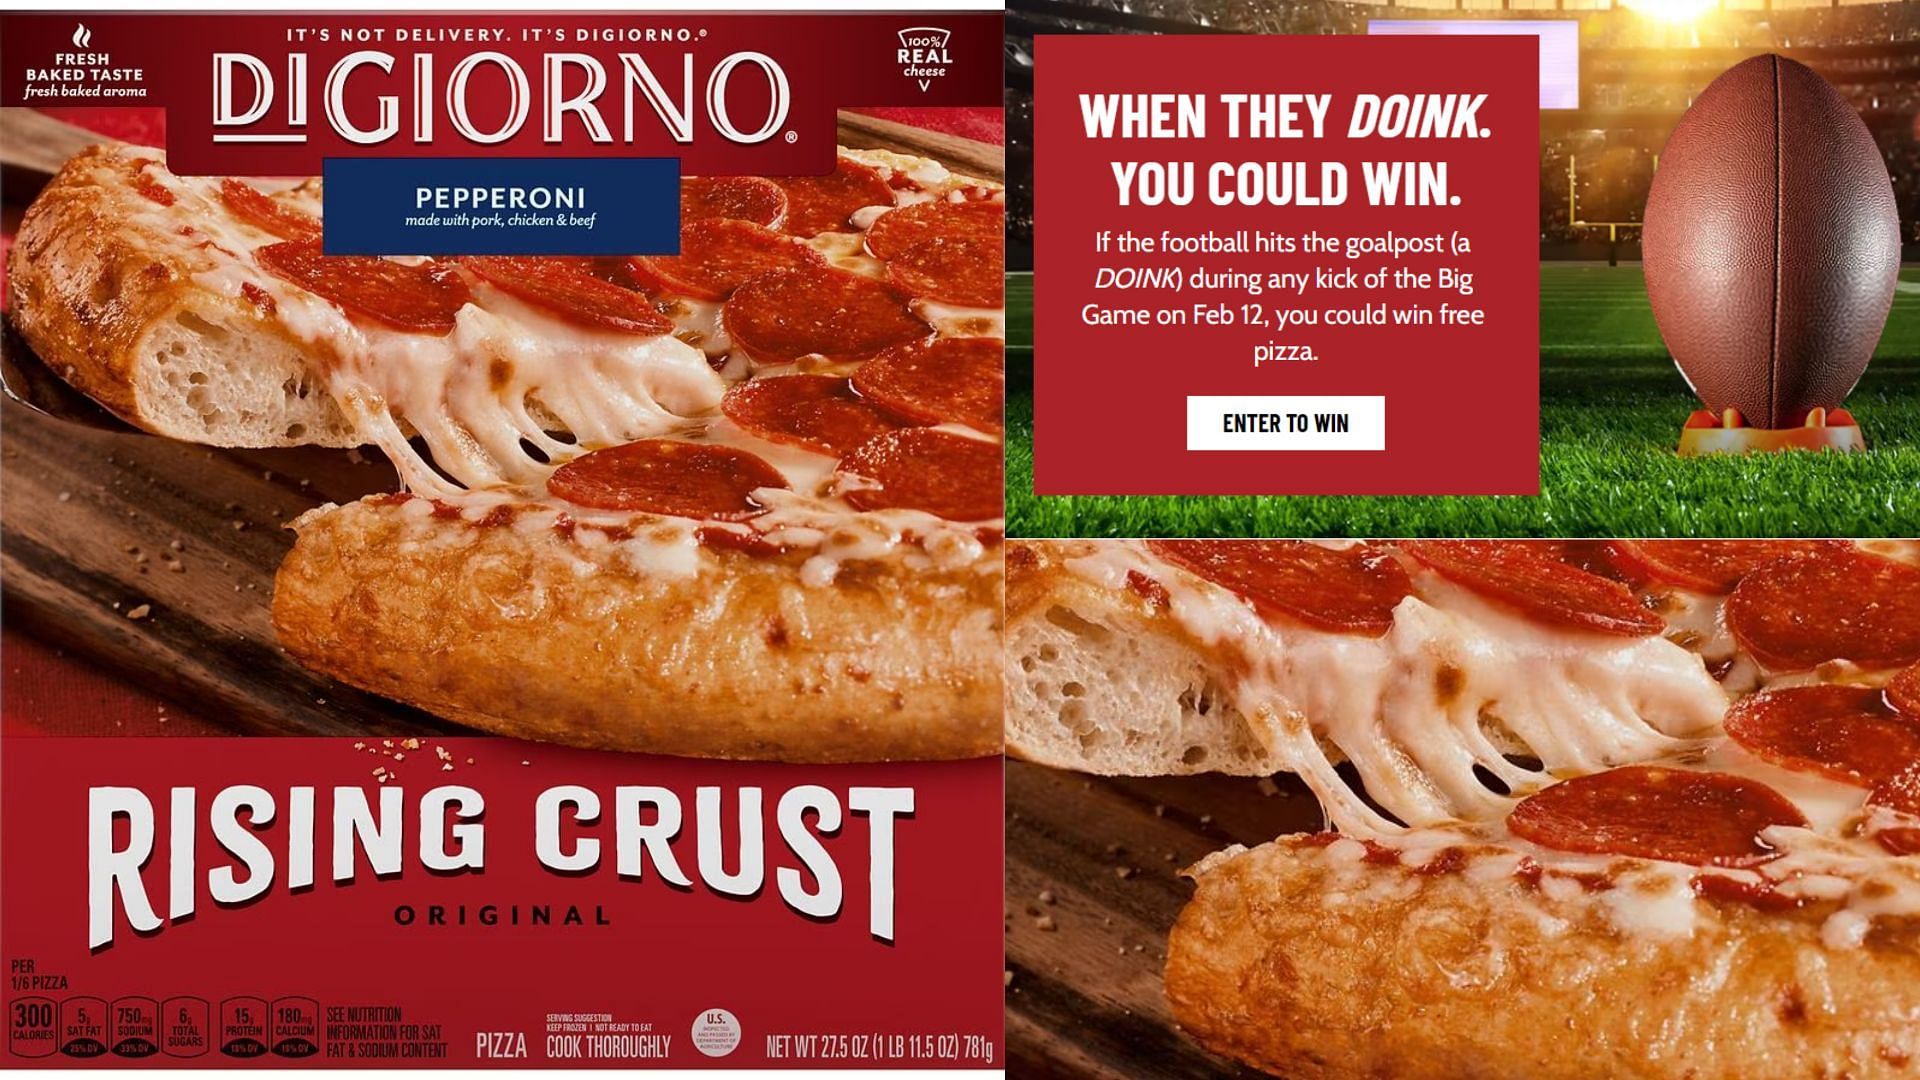 DiGiorno Pizza gives away free pizza during the Super Bowl game on February 12 (Image via DiGiorno Pizza)